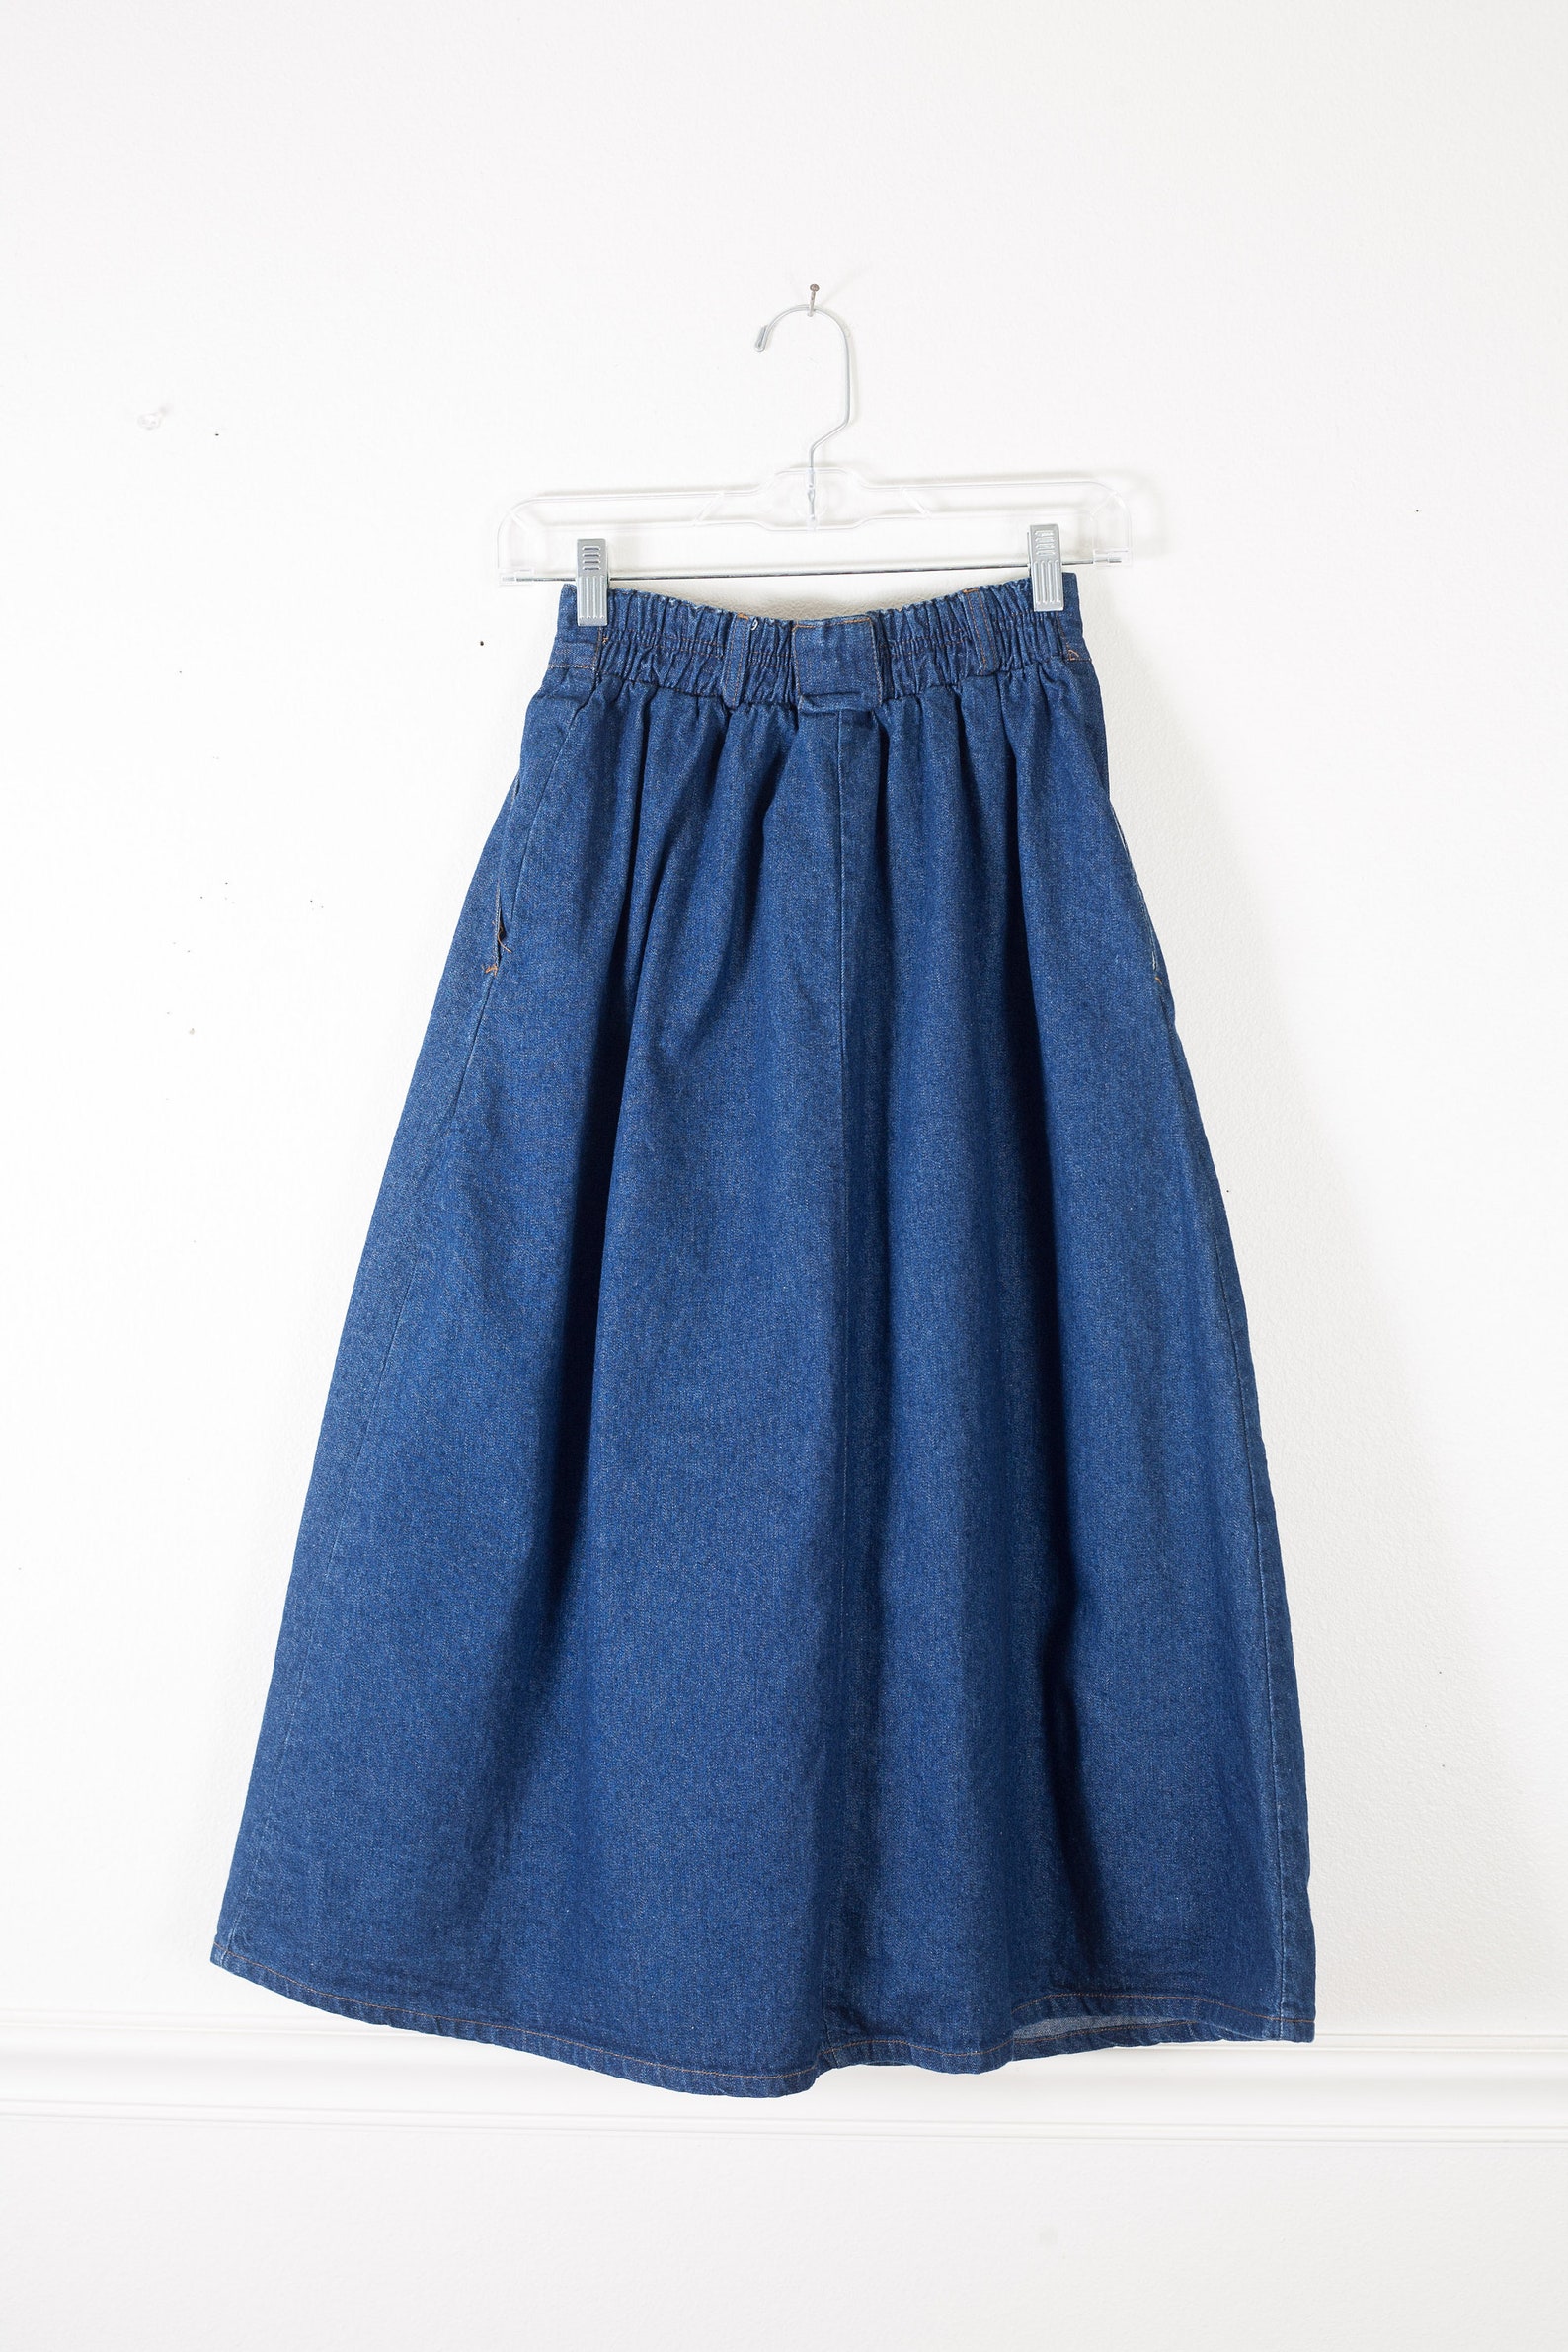 80s High Waist Denim Midi Skirt Blue Jean Prairie Skirt | Etsy